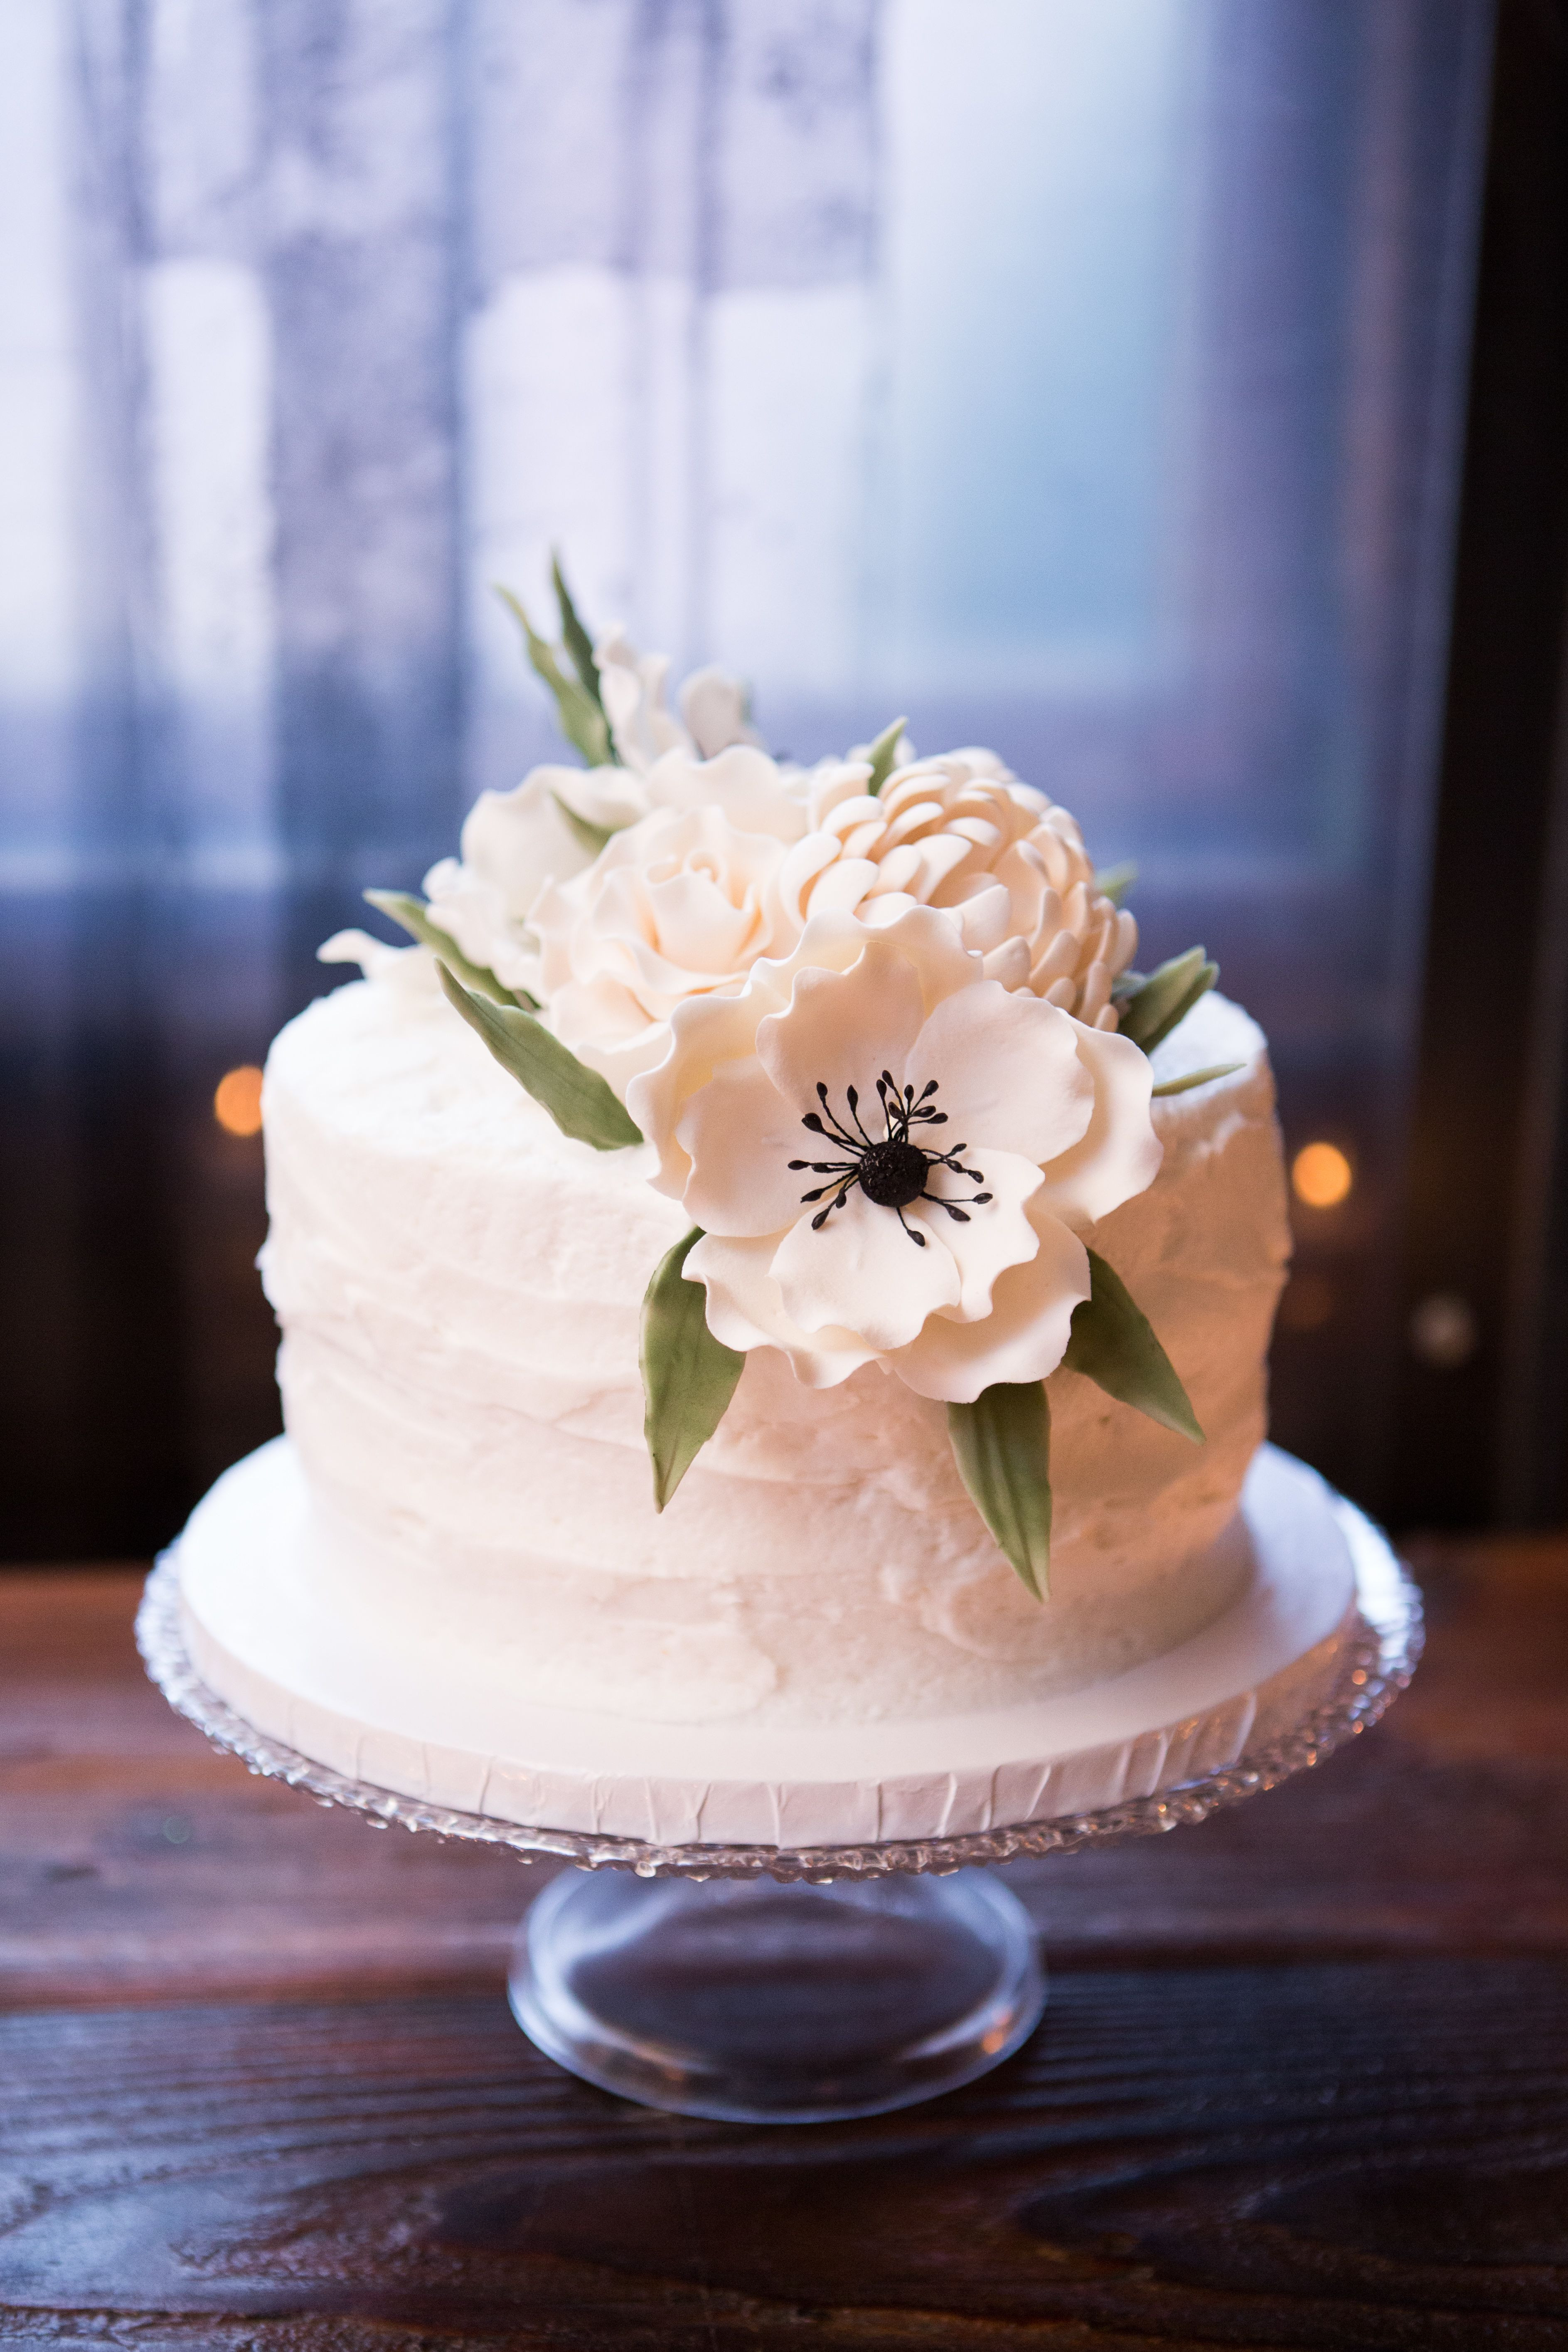 One Tier Wedding Cakes
 e Tier Wedding Cake With White Fondant Flowers